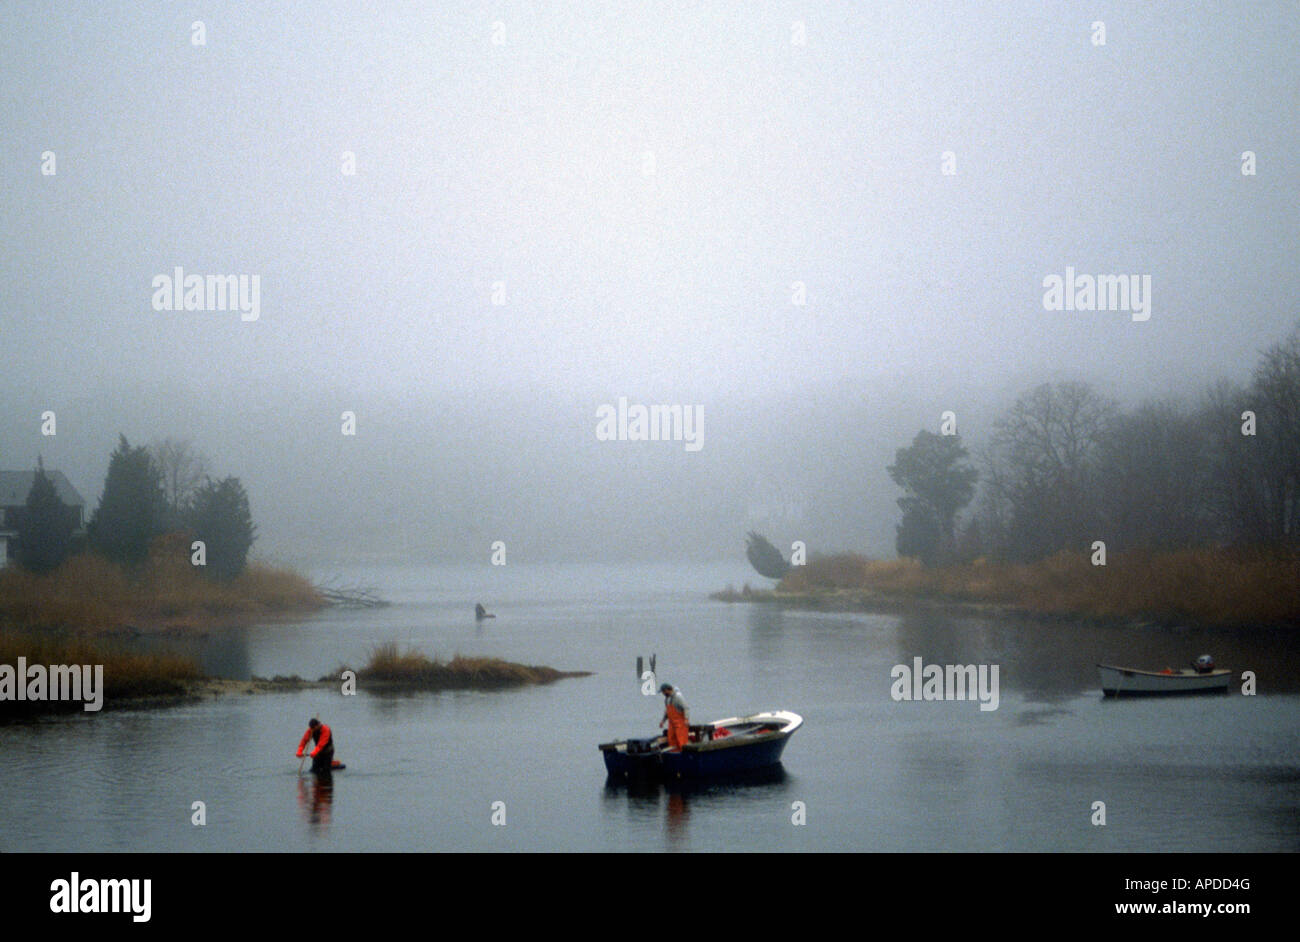 Men fishing on a misty waterway Southampton NY Stock Photo